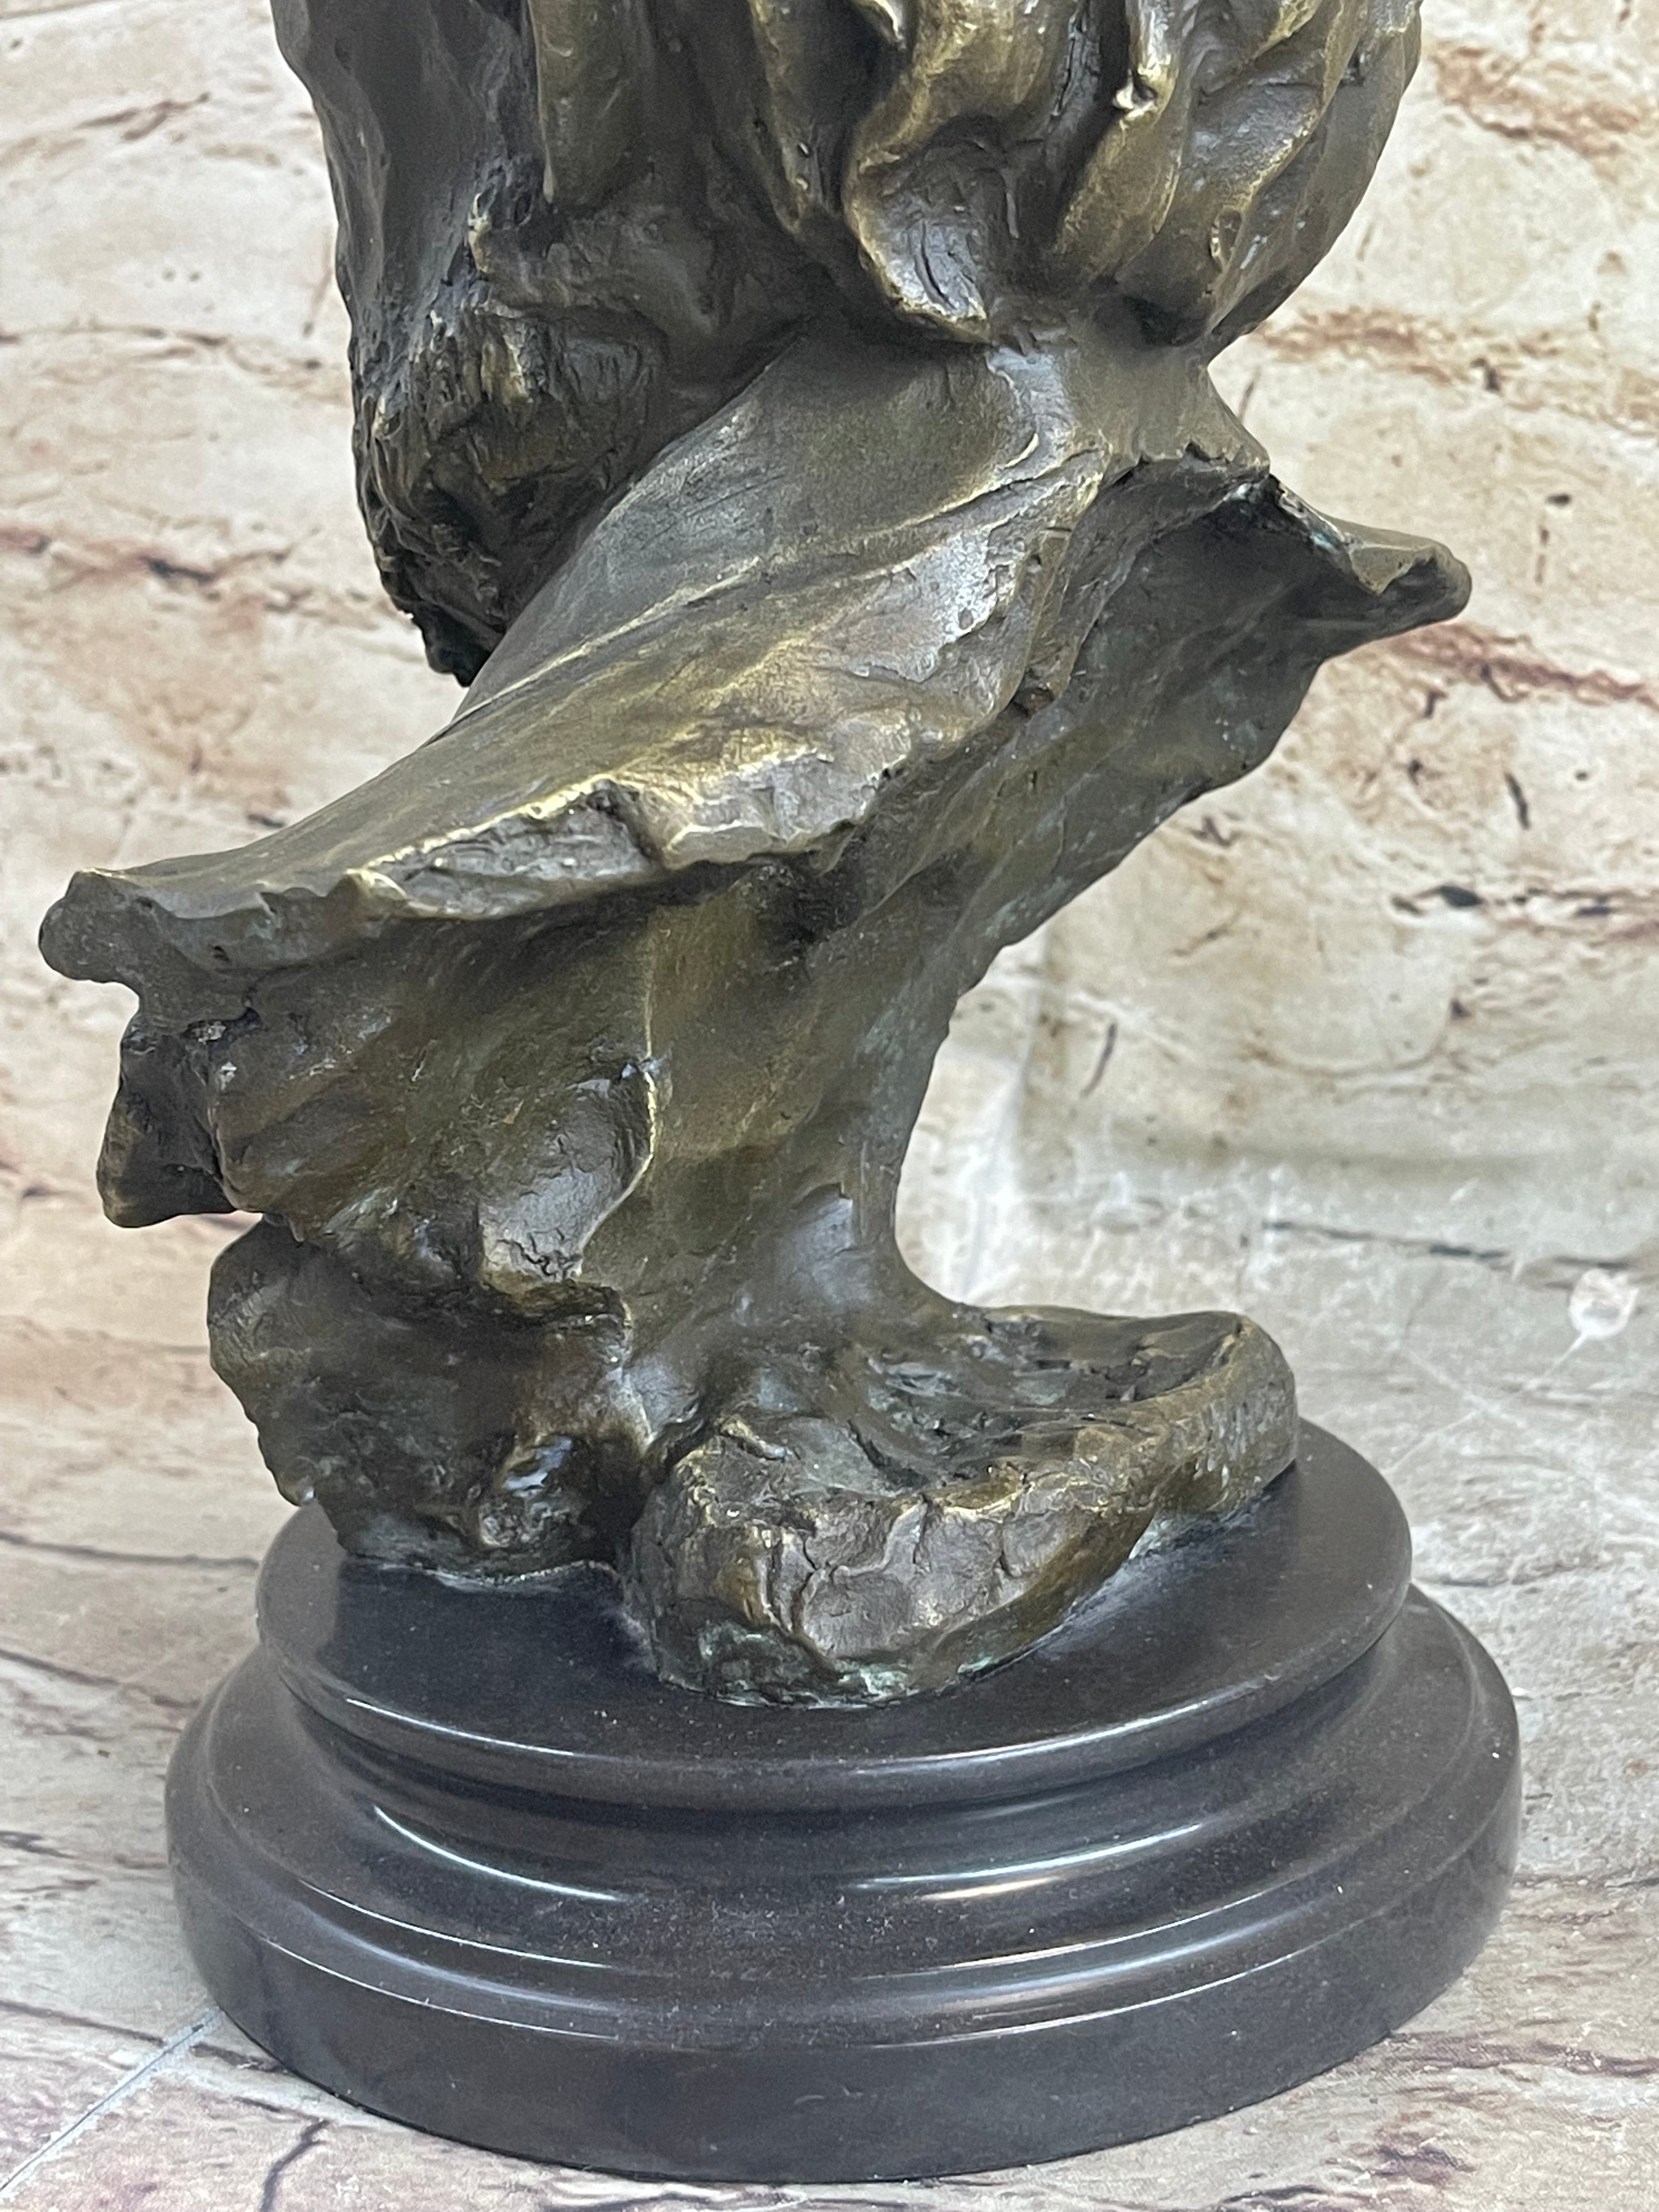 Hot Cast Abraham Lincoln USA president Bronze Sculpture Classic Artwork Figurine